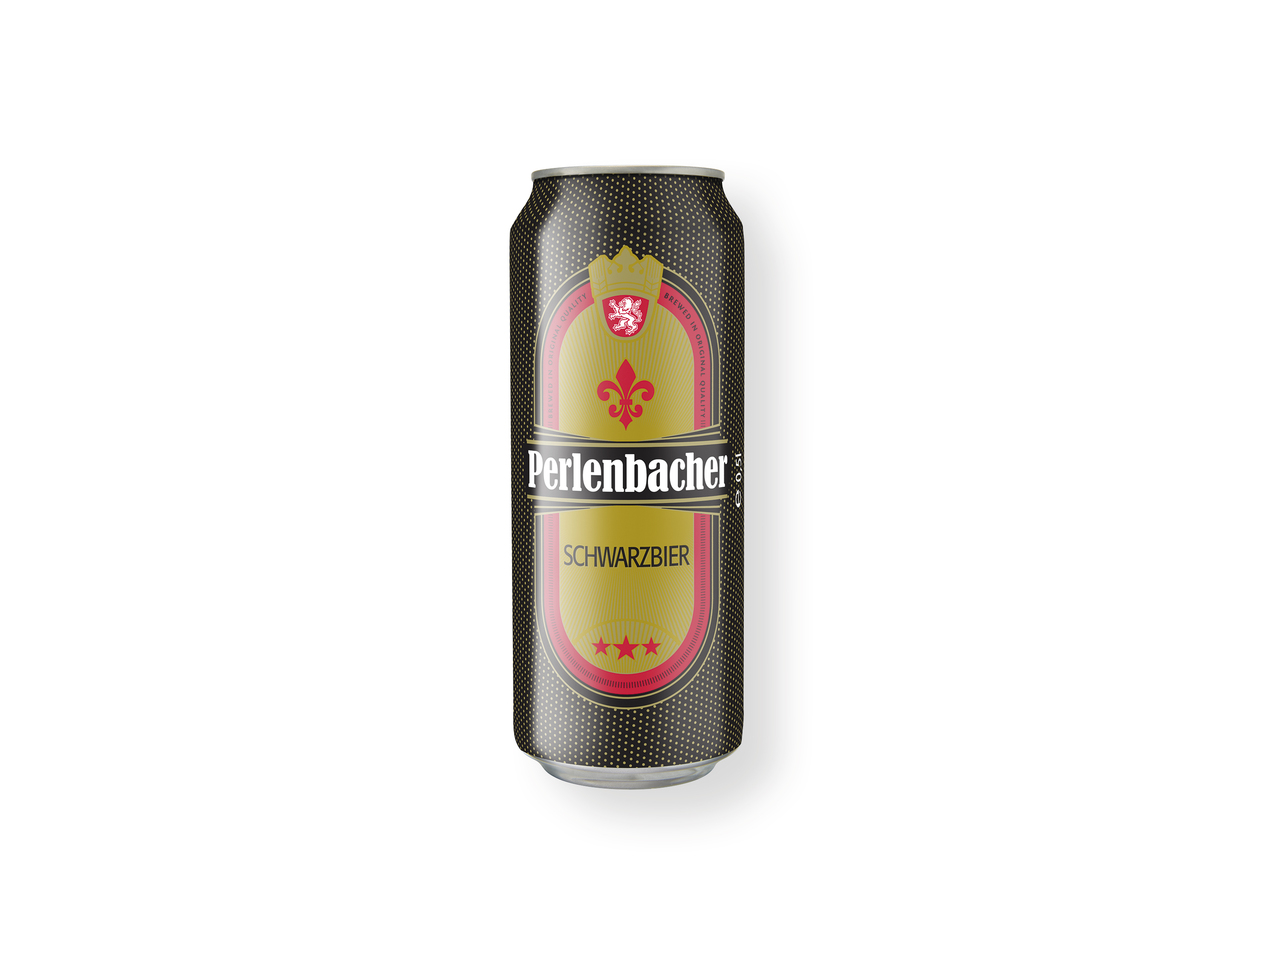 'Perlenbacher(R)' Cerveza negra